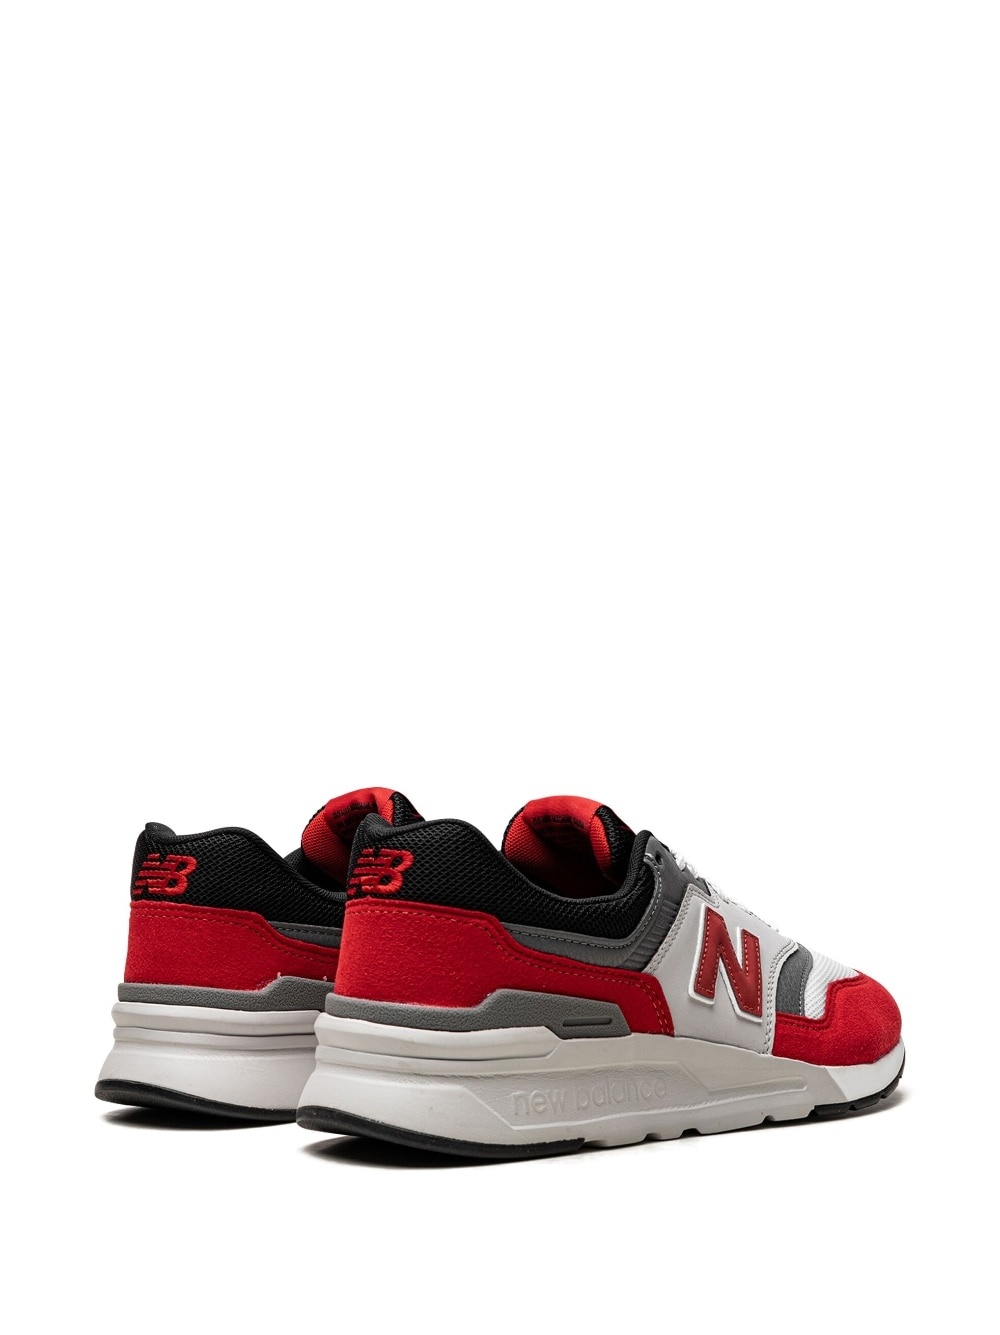 997H "Red/Black" sneakers - 3